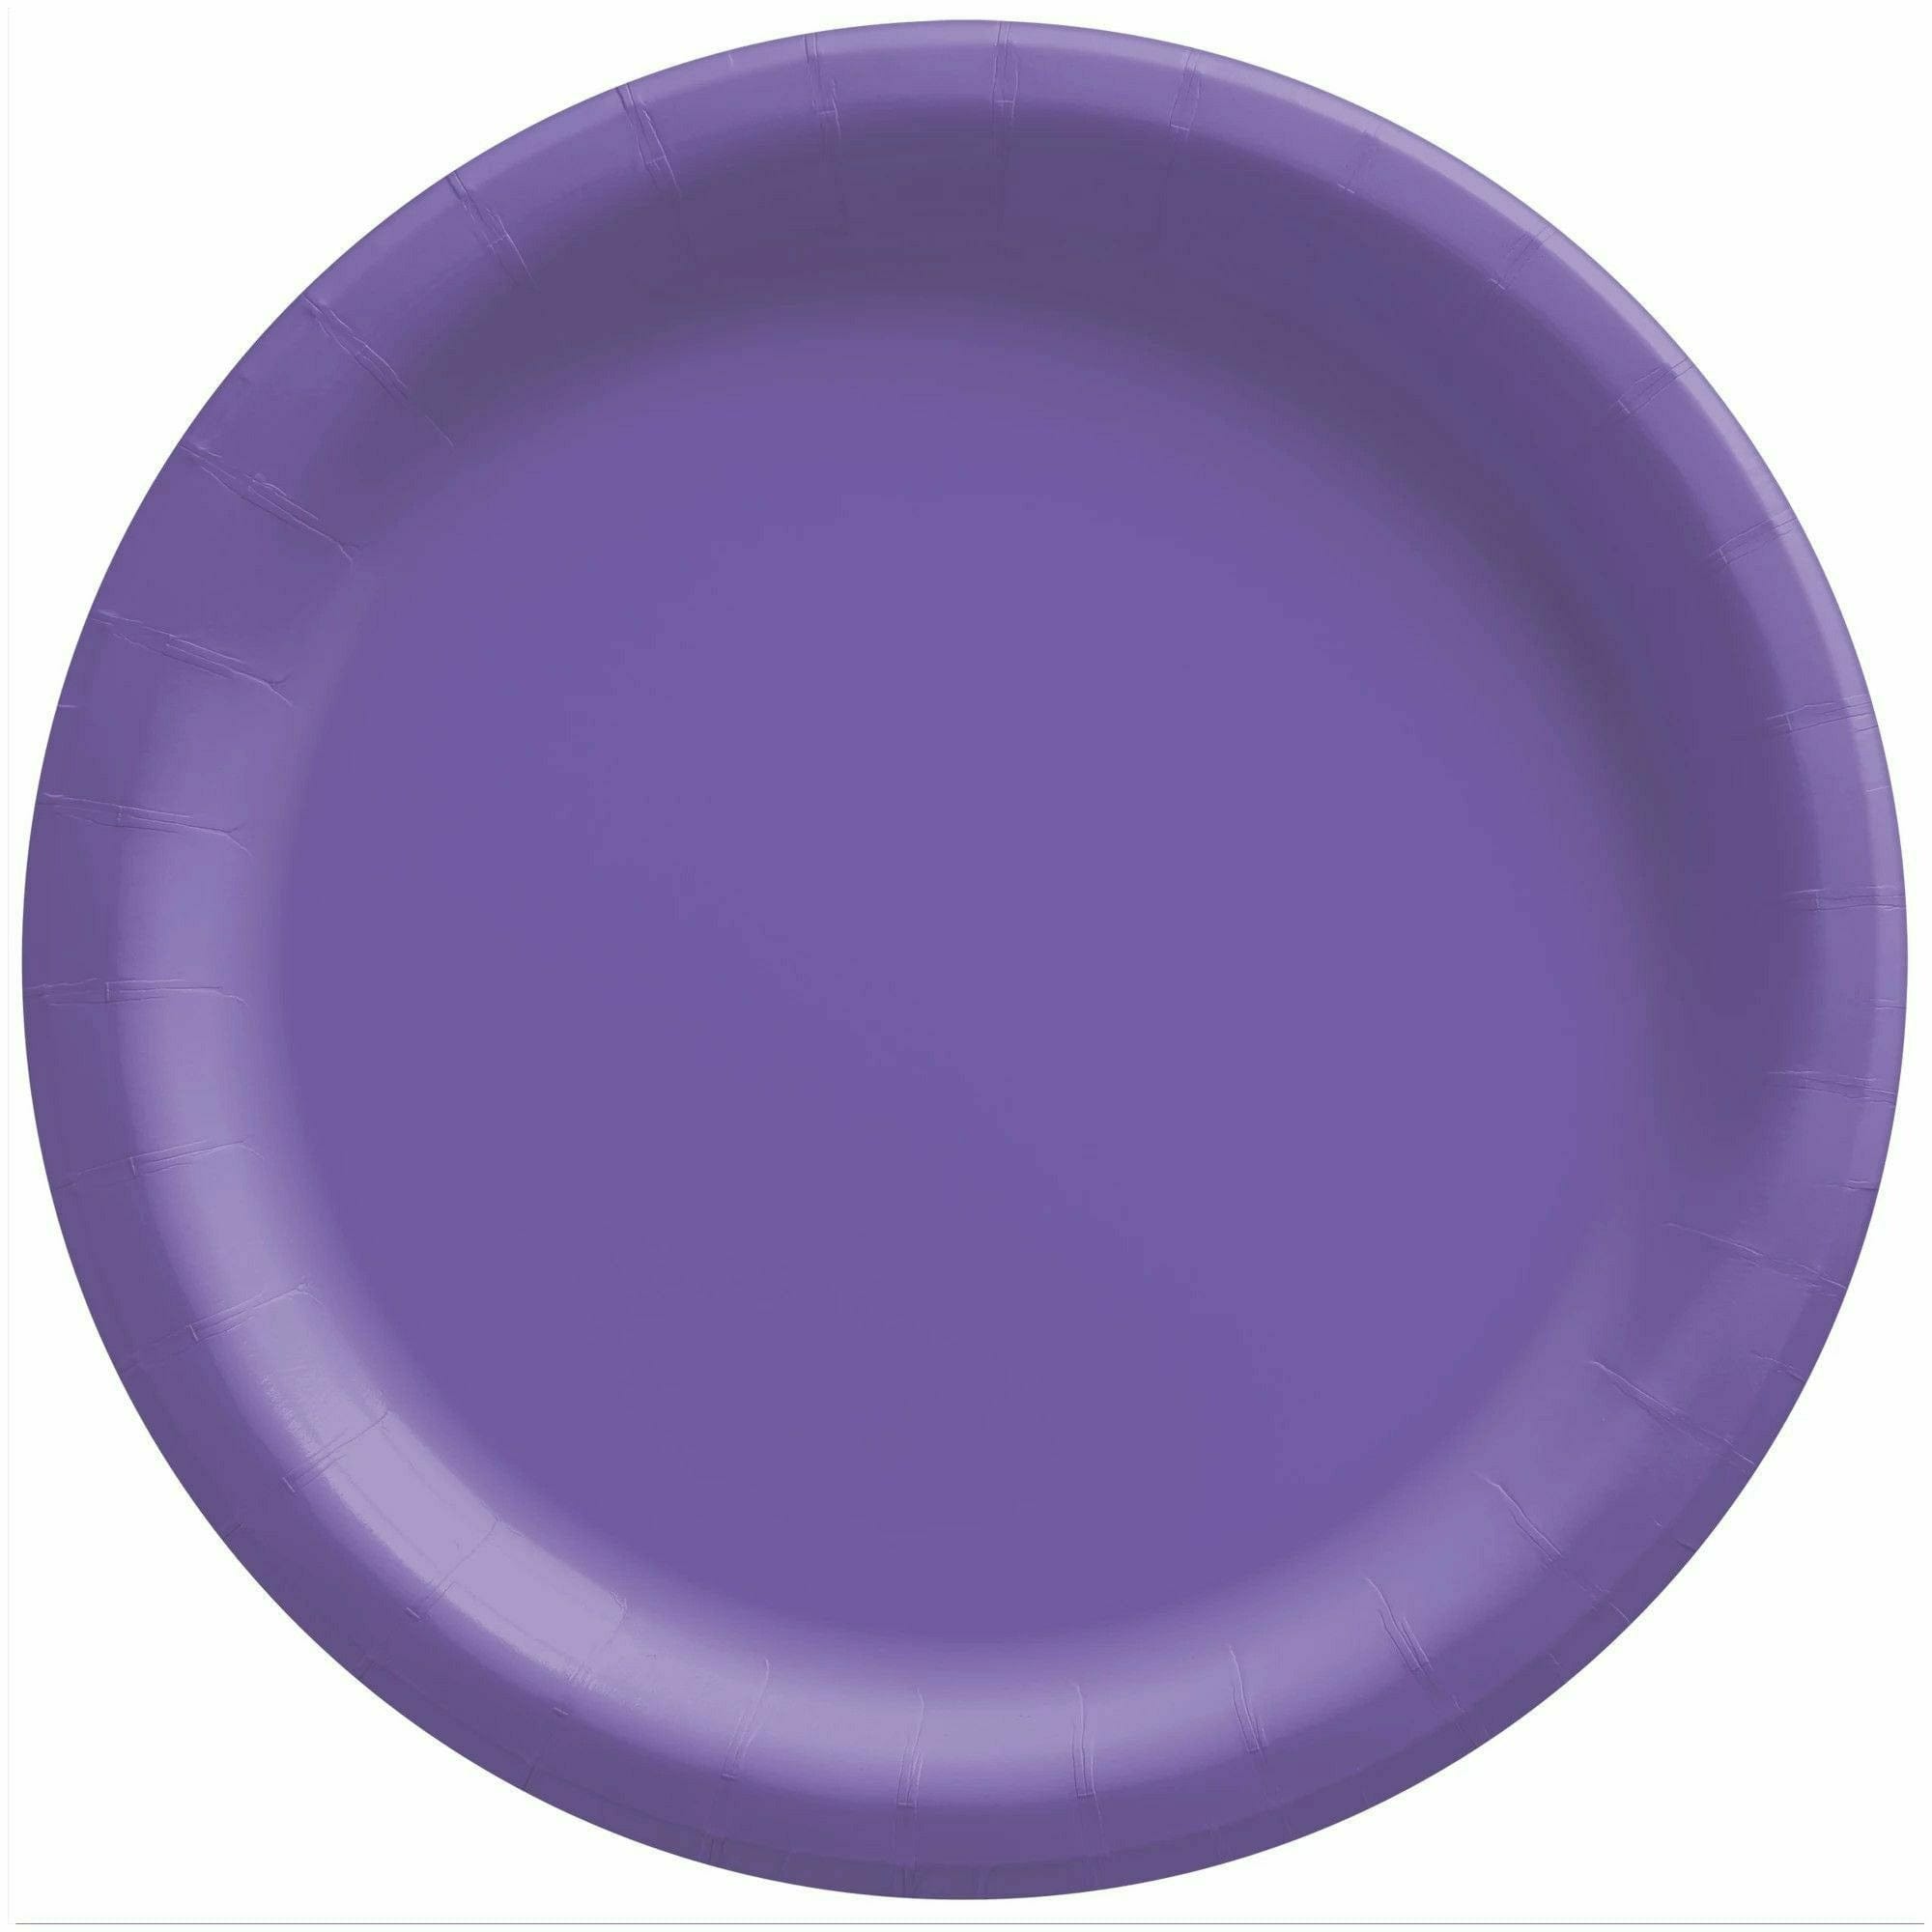 Amscan BASIC New Purple - 6 3/4" Round Paper Plates, 50 Ct.